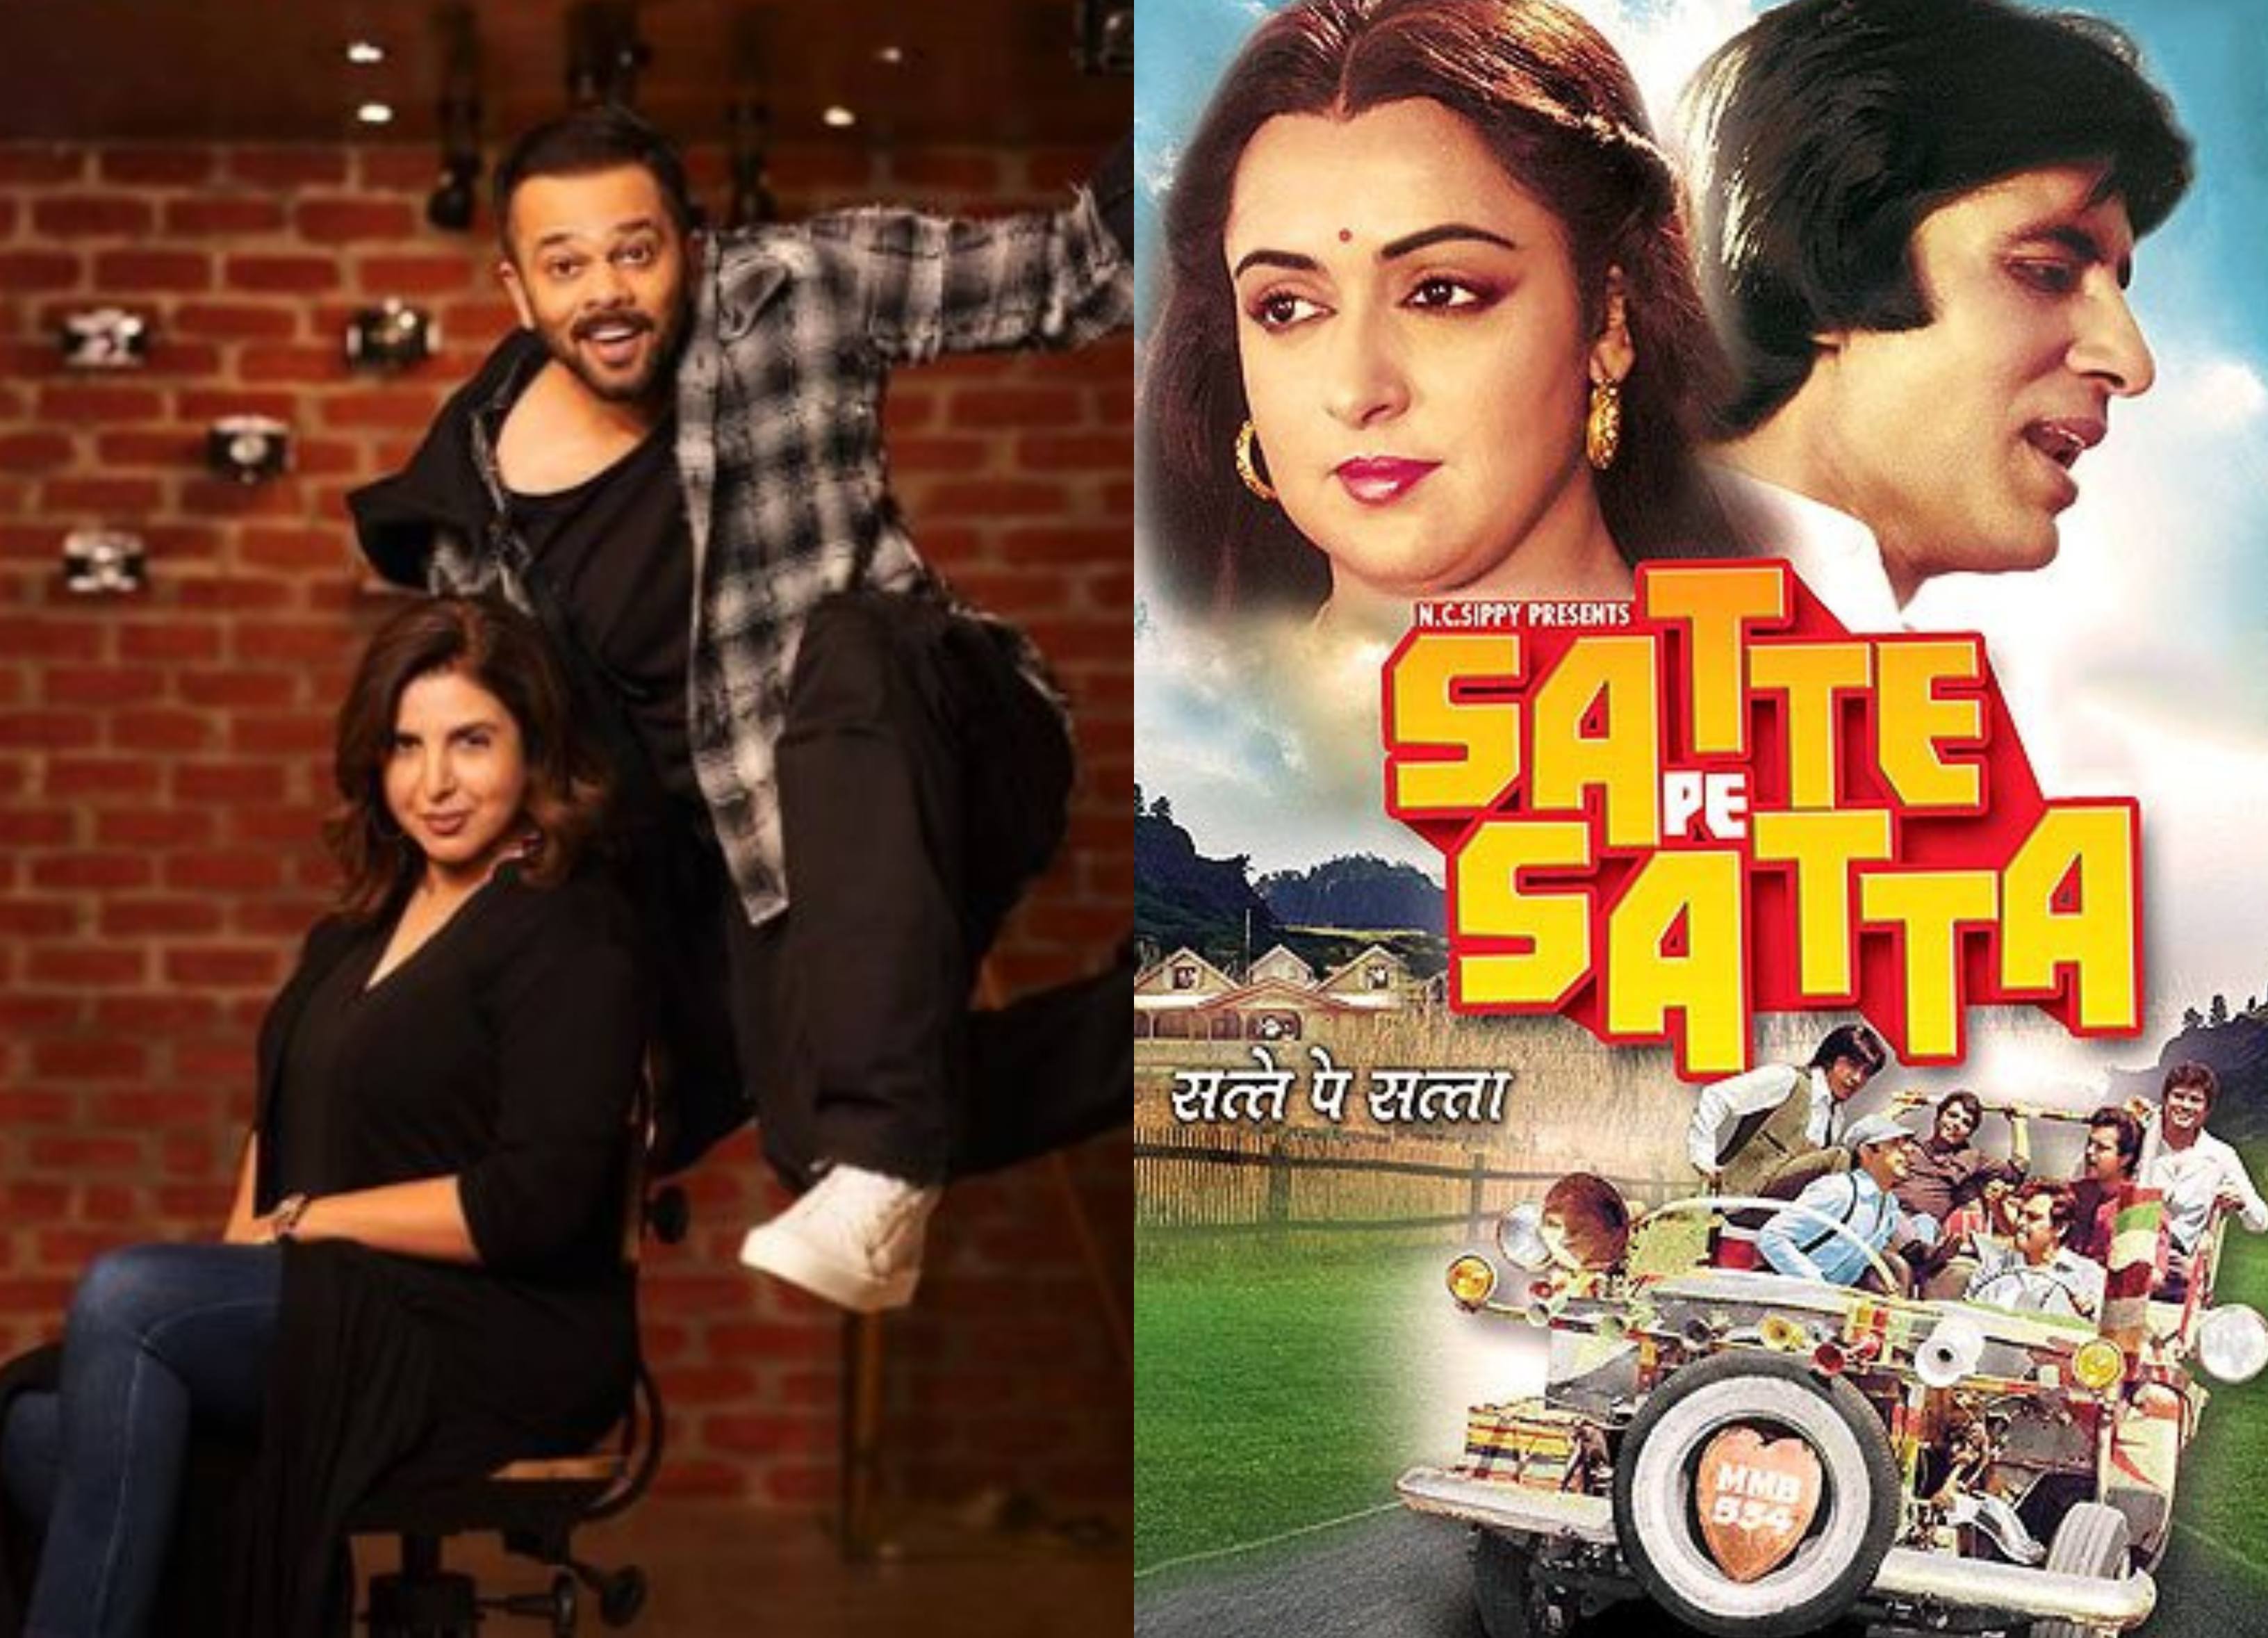 Rohit Shetty and Farah Khan to remake Satte Pe Satta